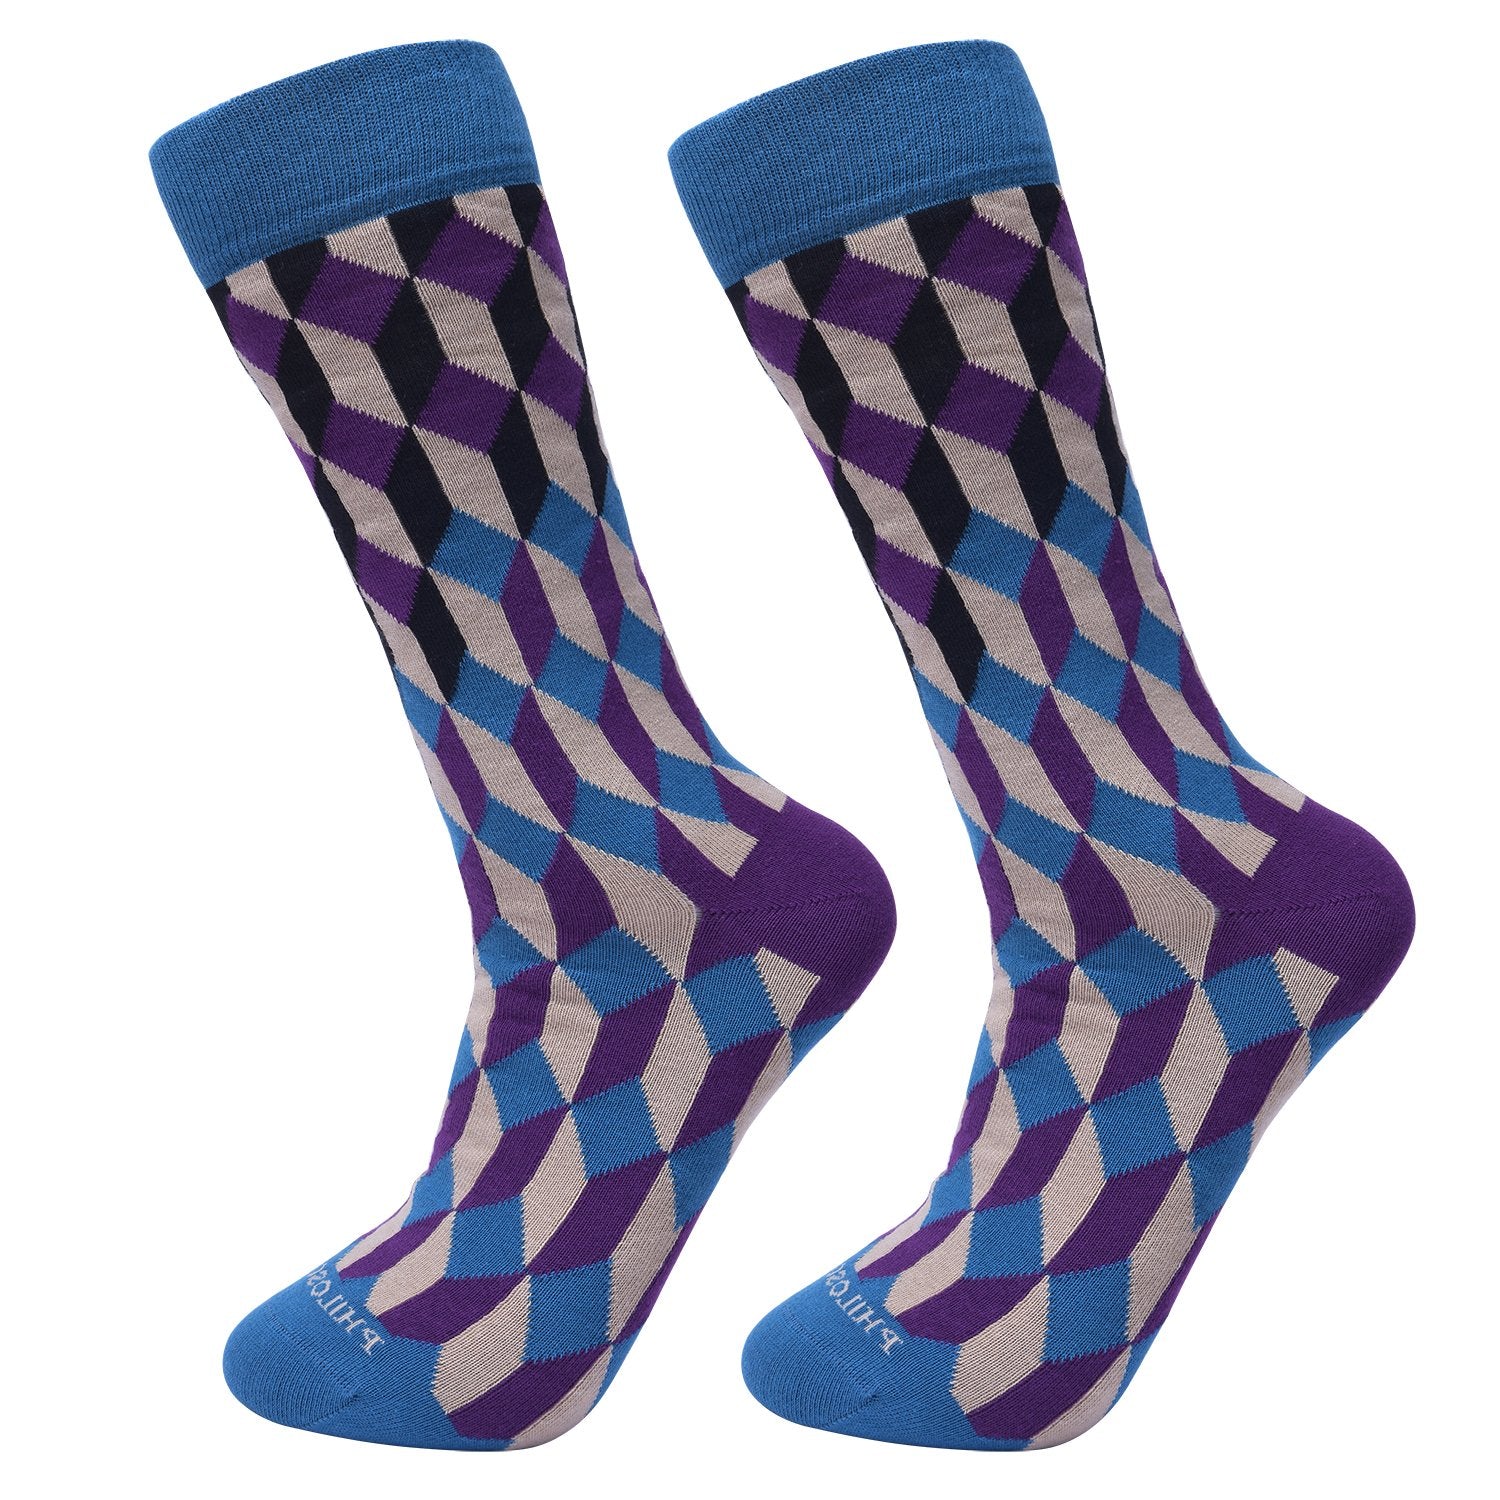 ComfySocks - What's more exciting than getting socks delivered? #comfysocks